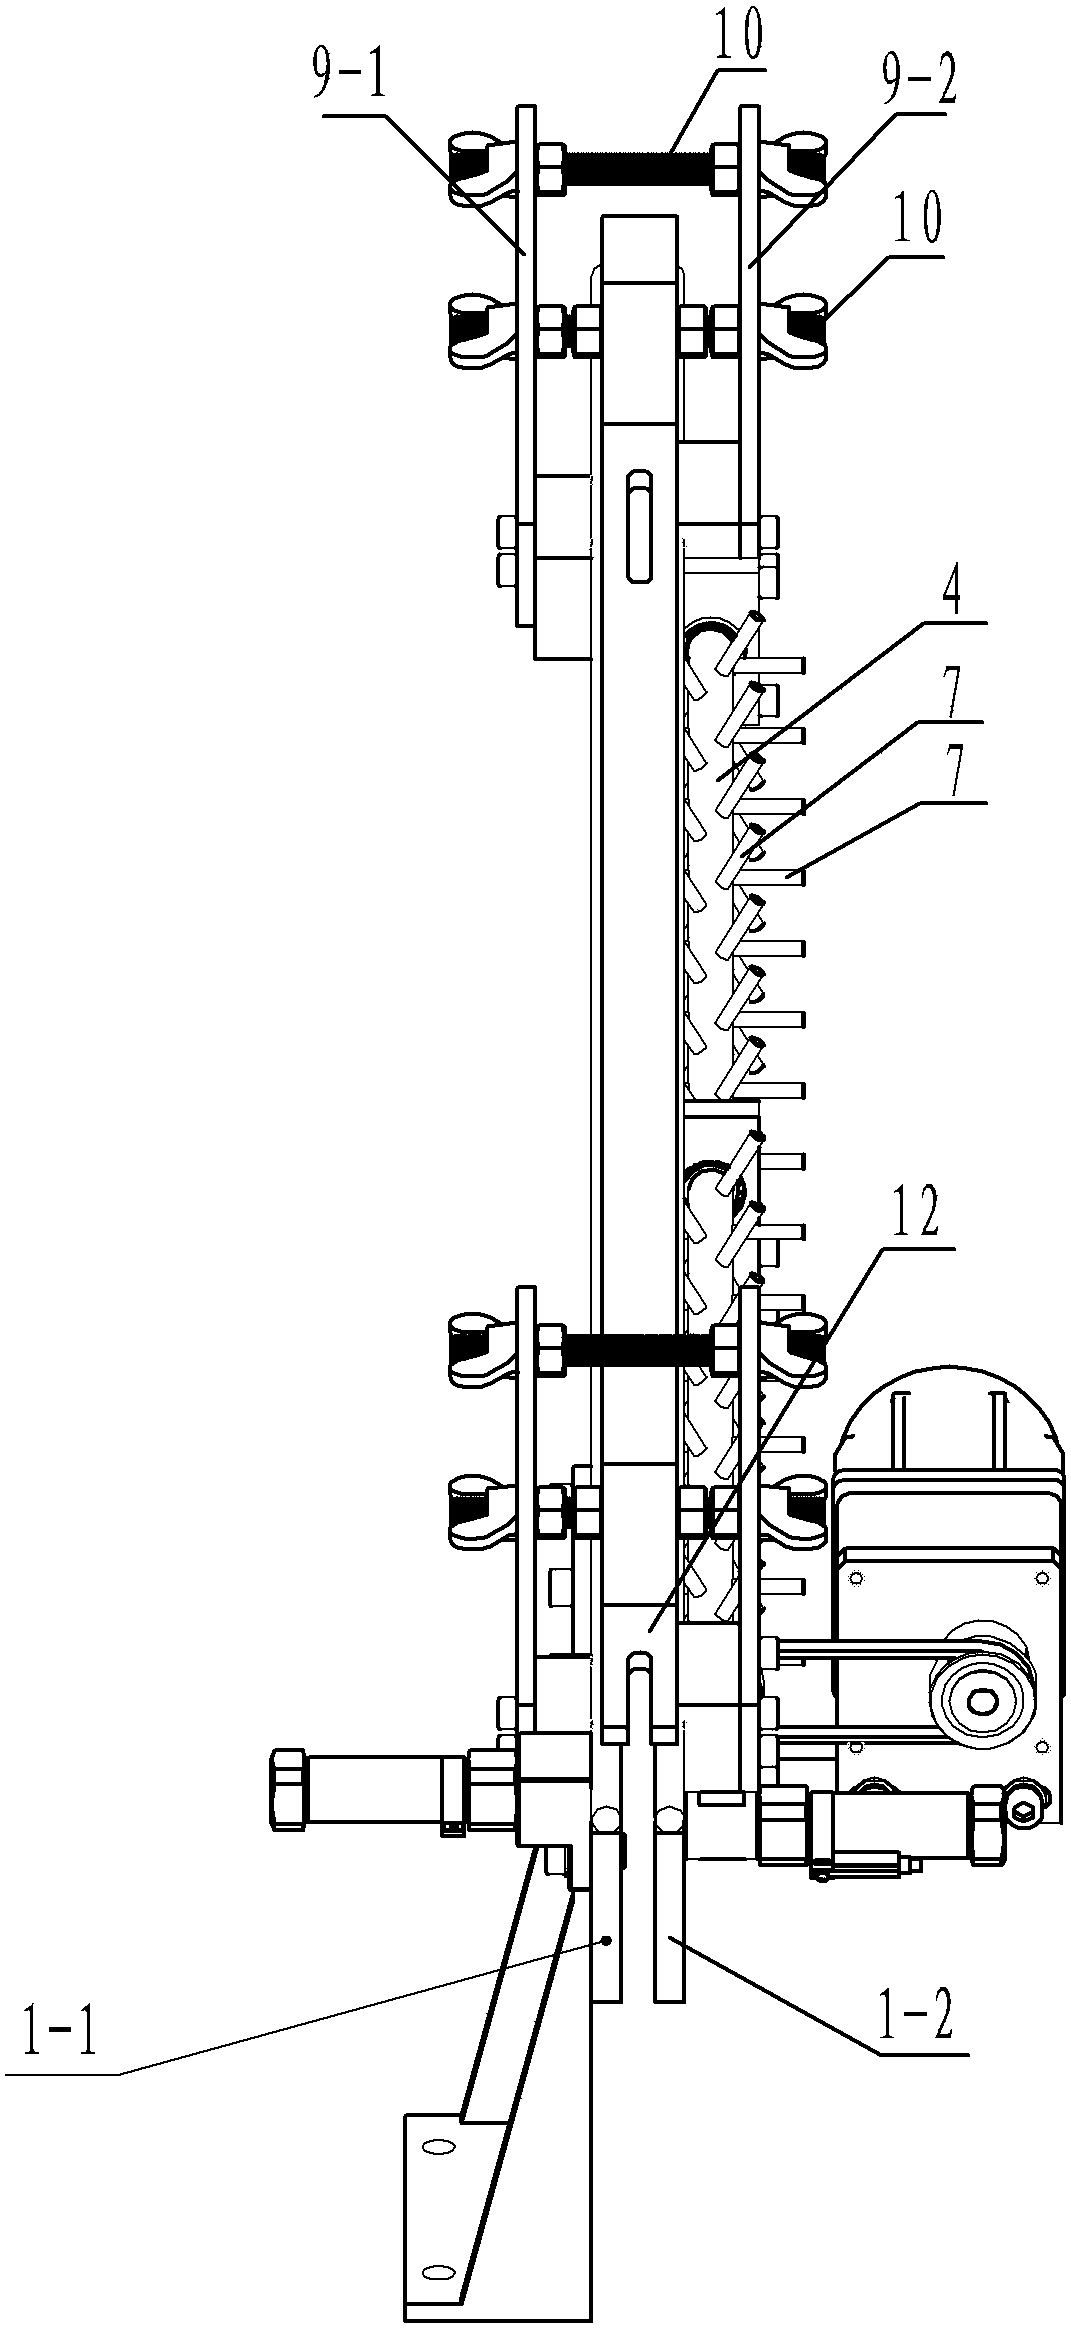 Buffer feeding device of air valve